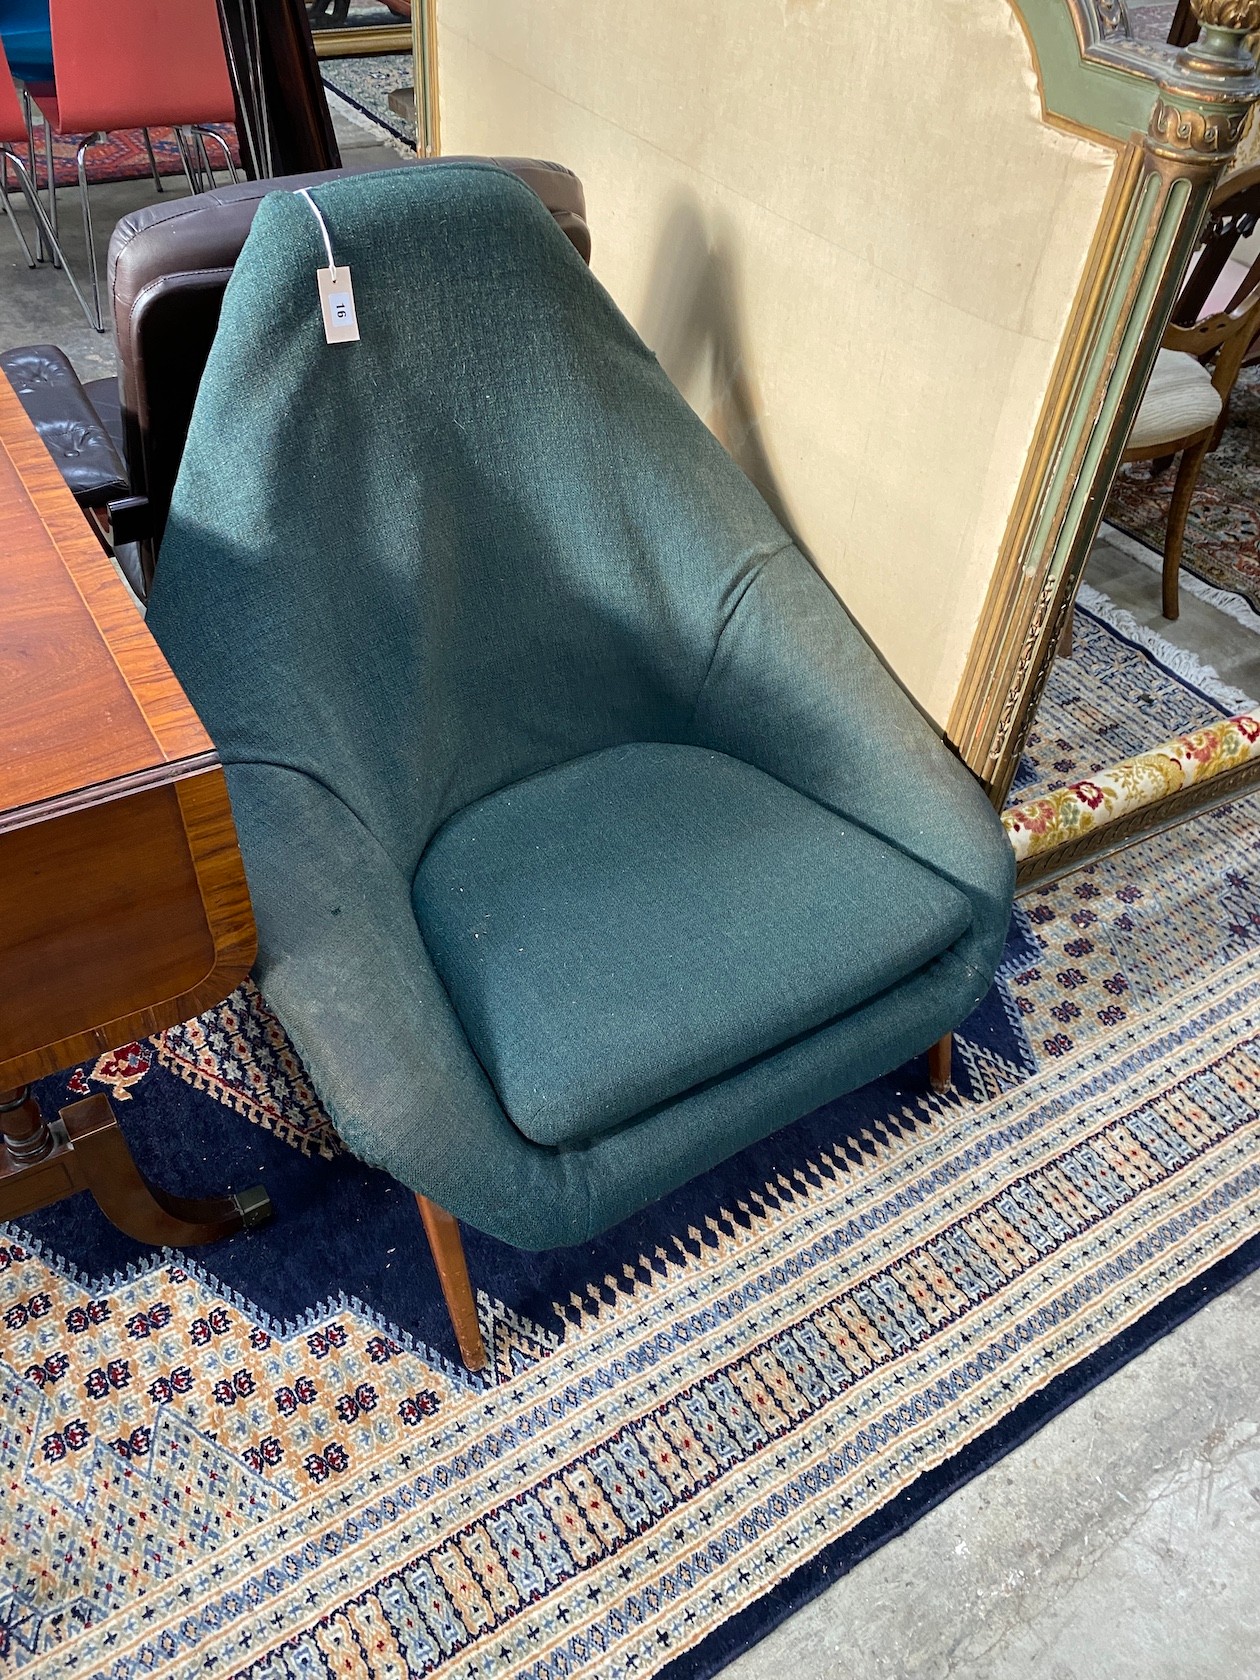 A Lurashell glass fibre lounge chair, diameter 88cm, depth 90cm, height 92cm